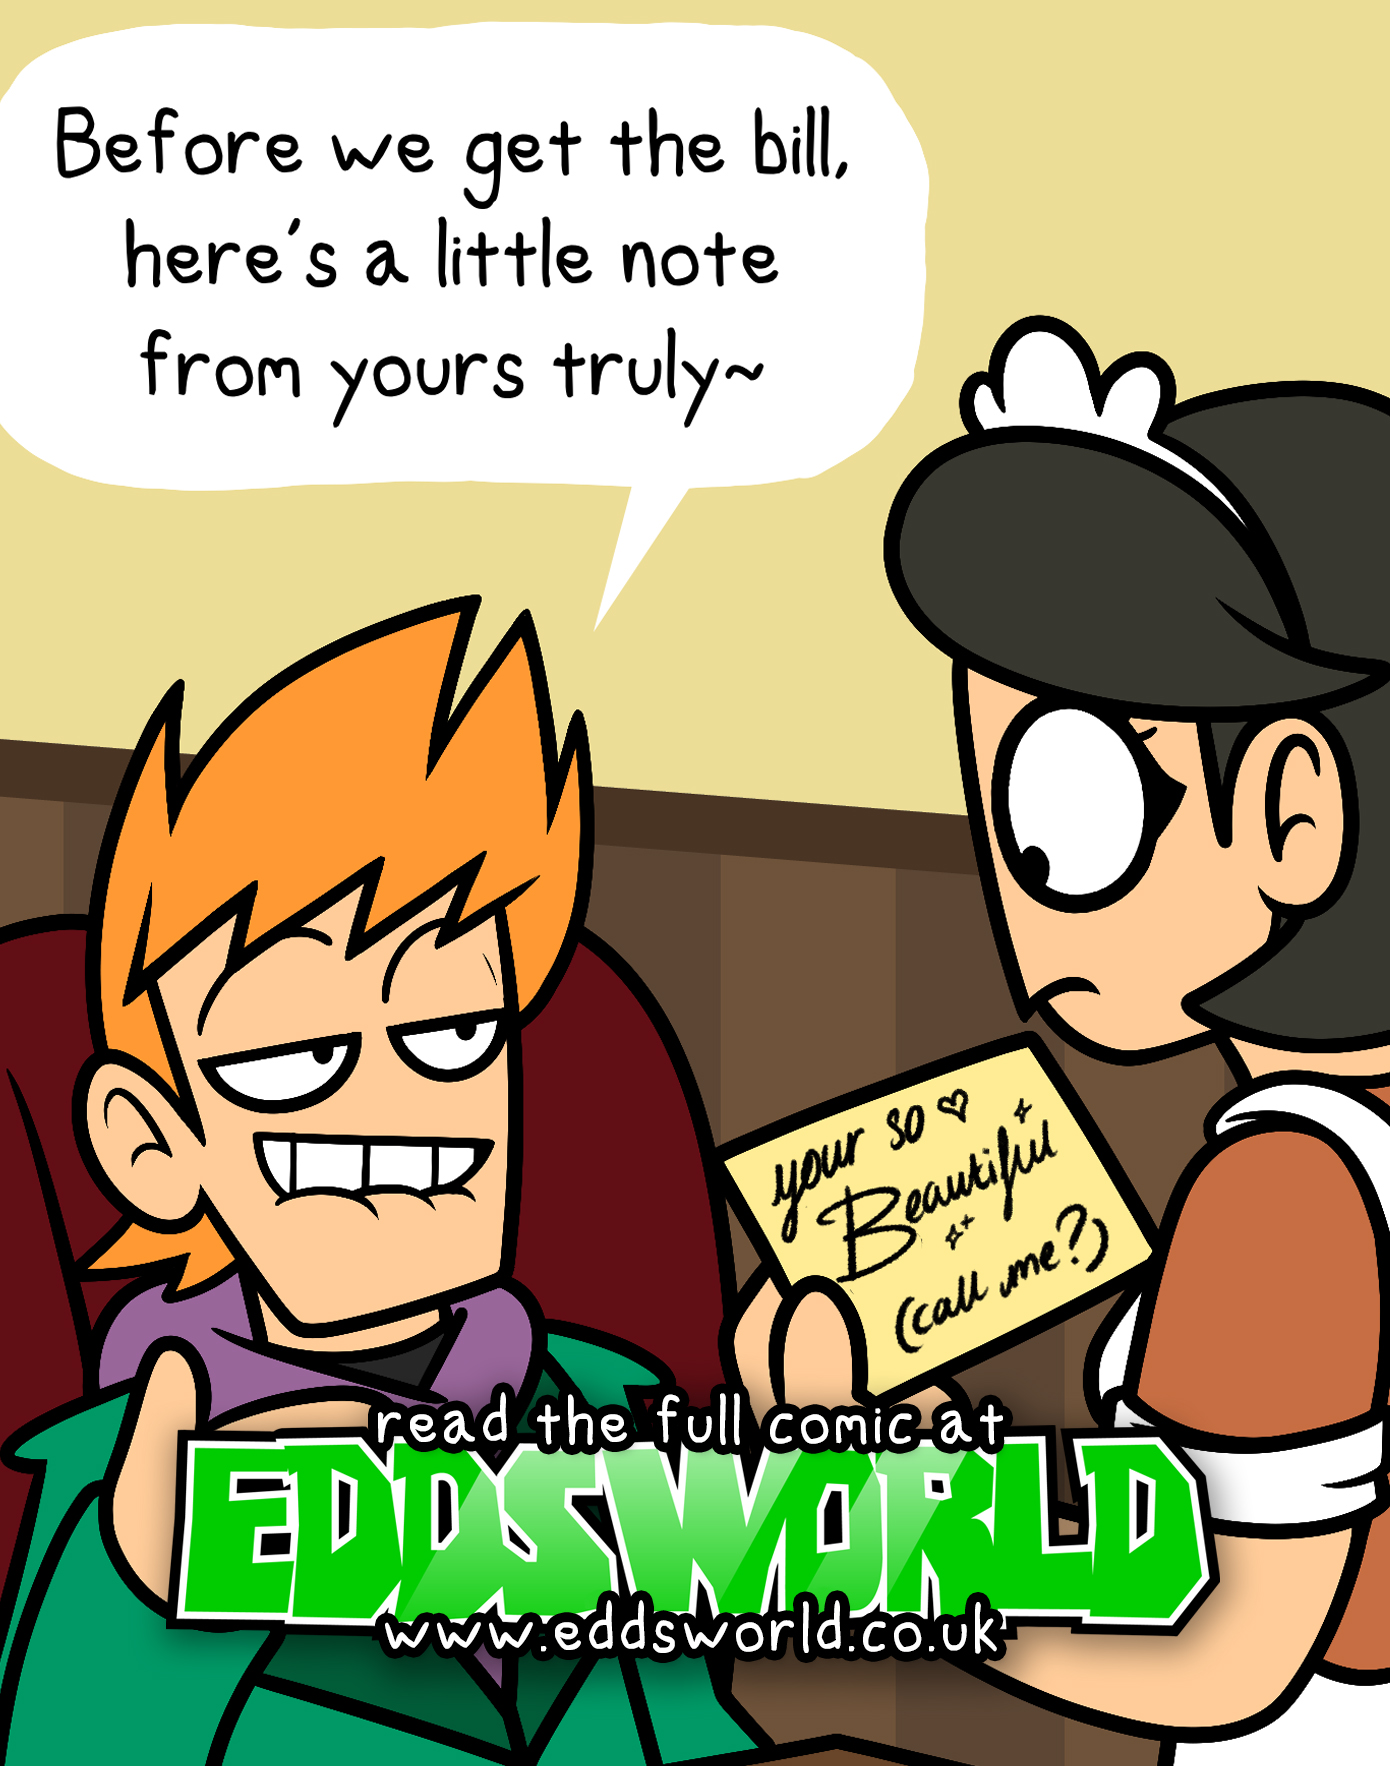 Eddsworld on X: NEW COMIC! Better pick that up Matt! ☎️ Read